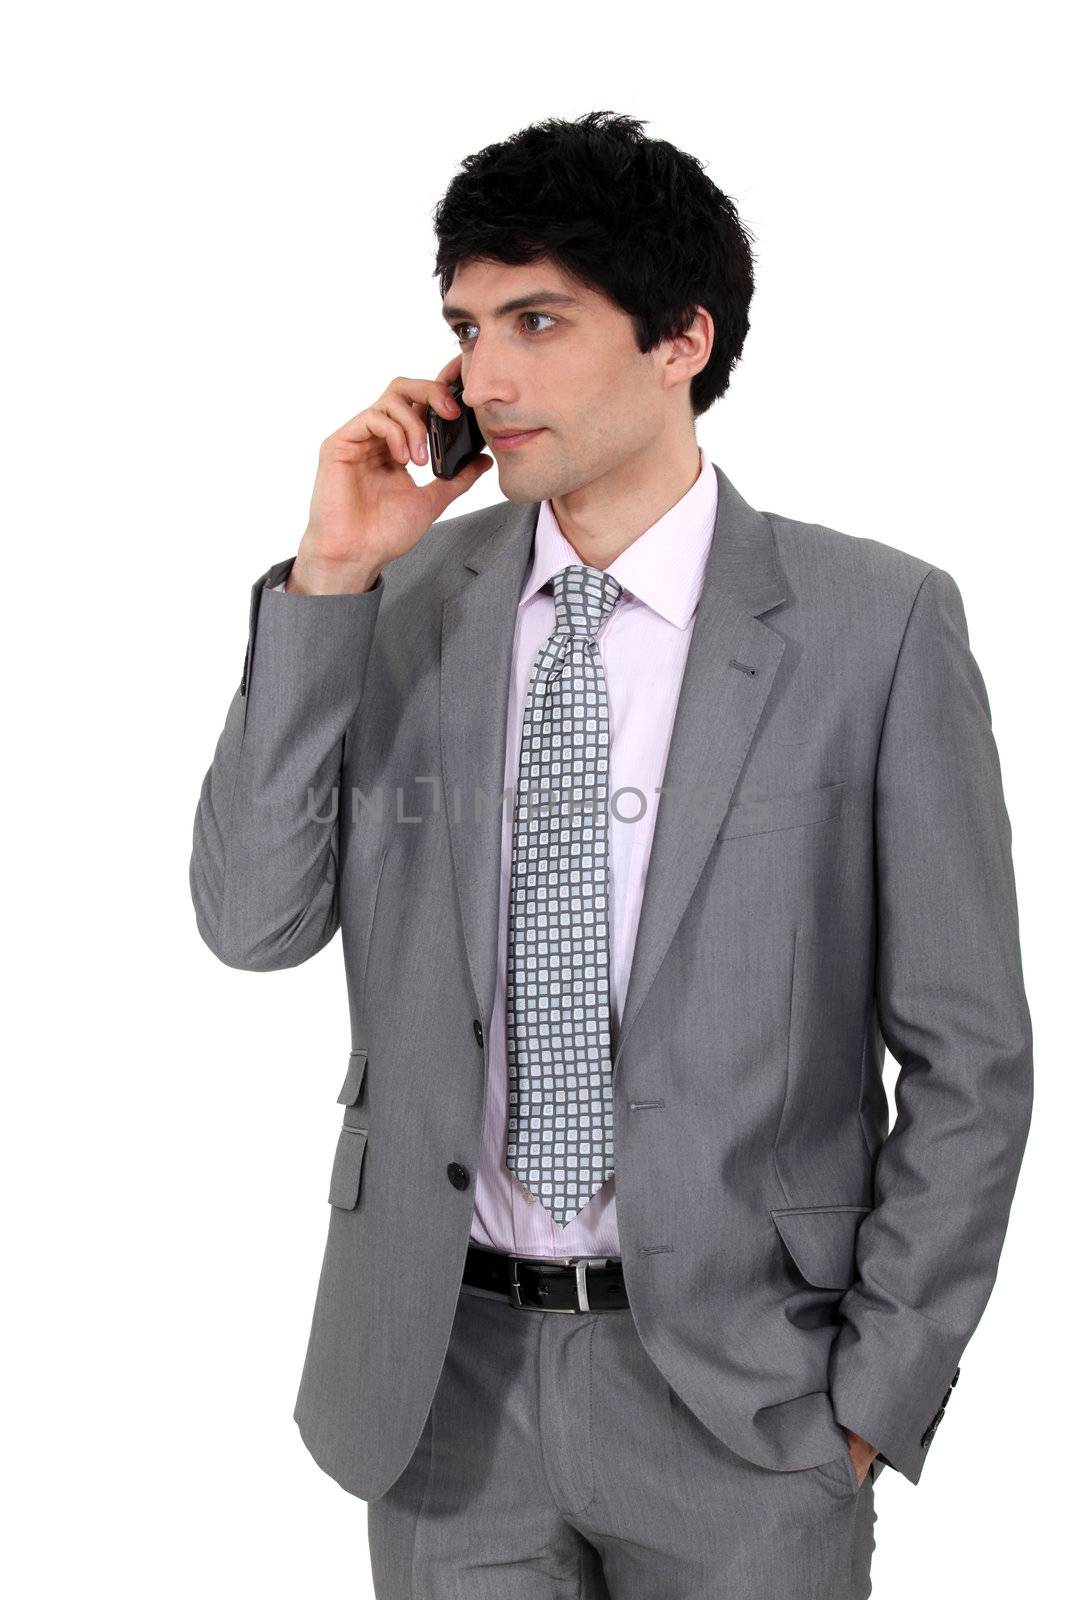 Businessman on the phone by phovoir